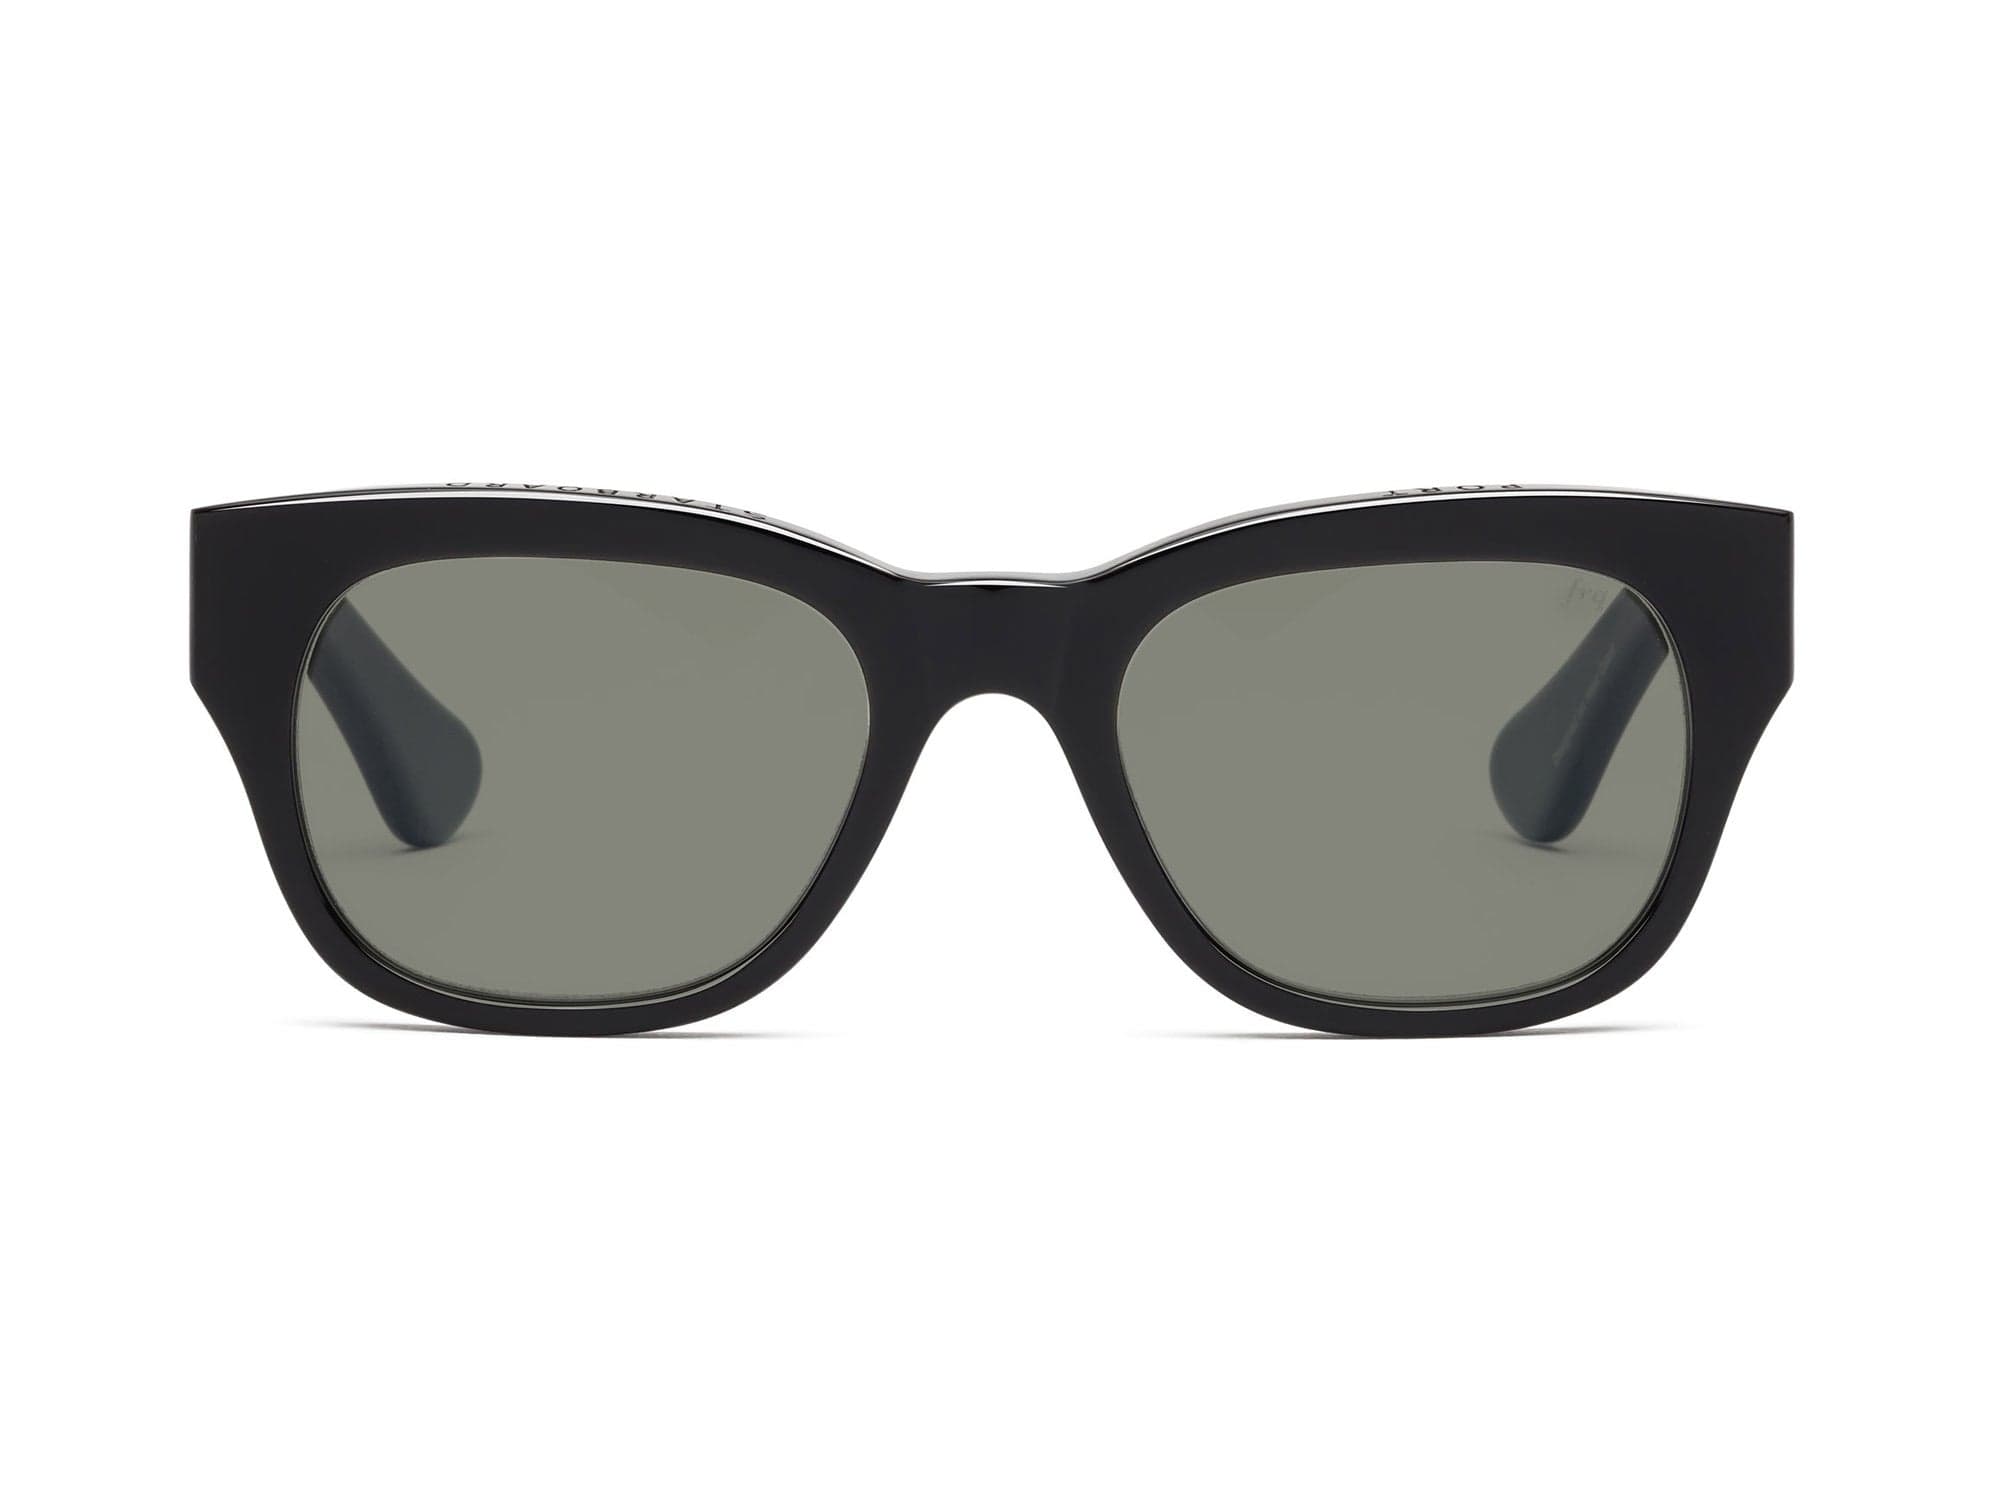 Custom Reading Glasses with Different Strength for Each Eye Black Clear-Left Eye / +1.50